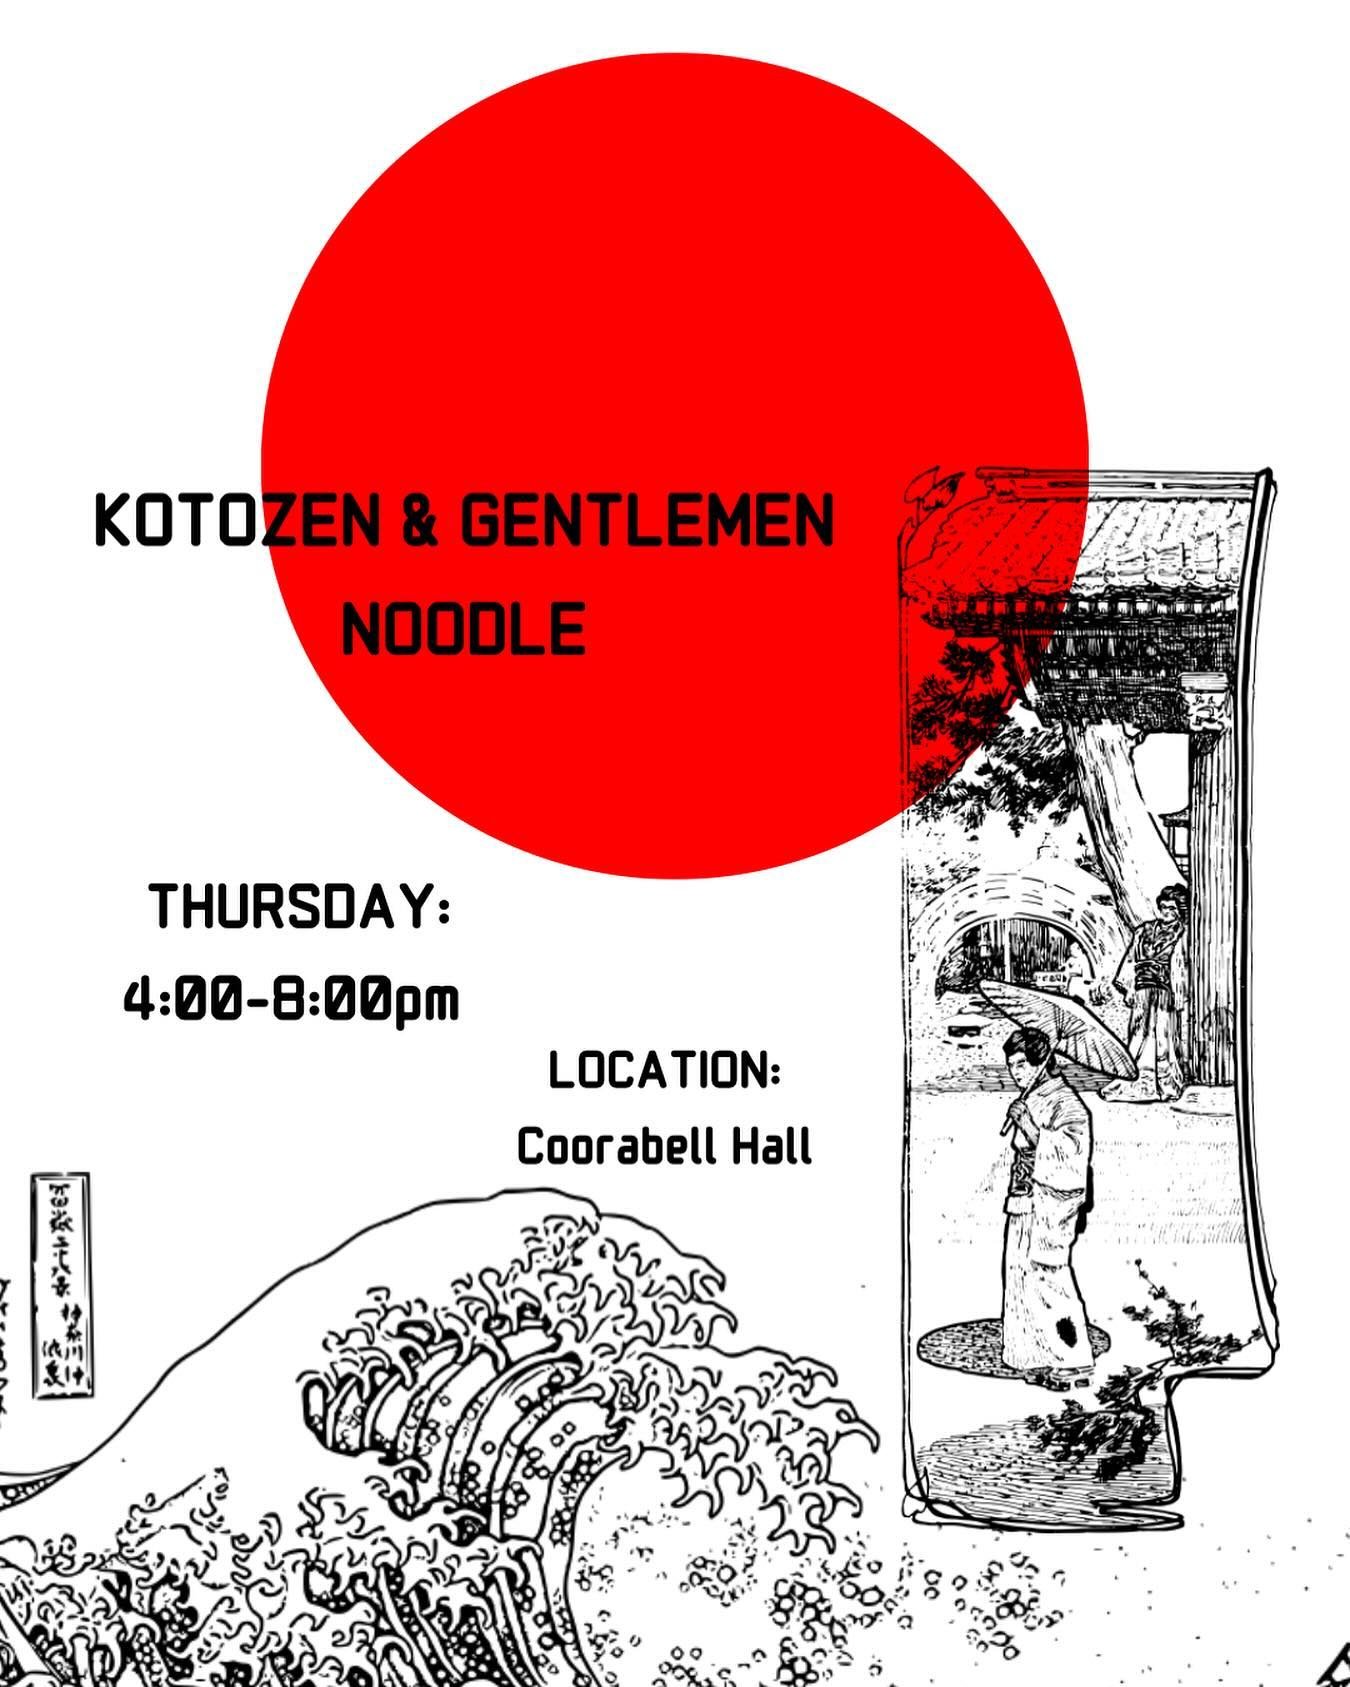 RAMEN AND JAPANESE FOOD TONIGHT 🇯🇵 4-8pm.